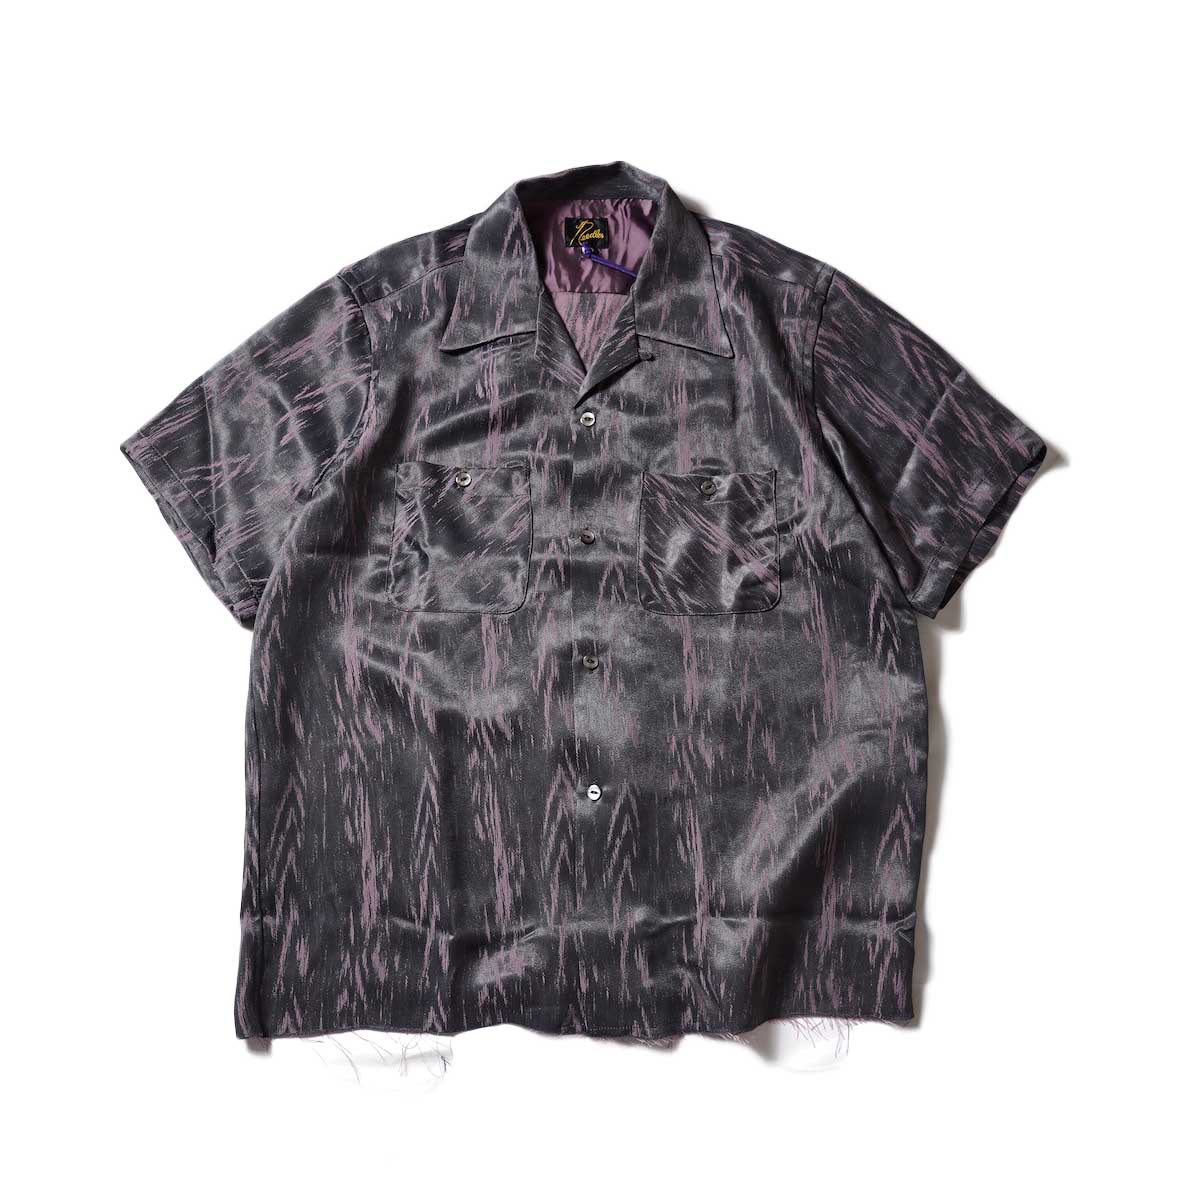 Needles / C.O.B. S/S Classic Shirt - Jacqard (Abstract)